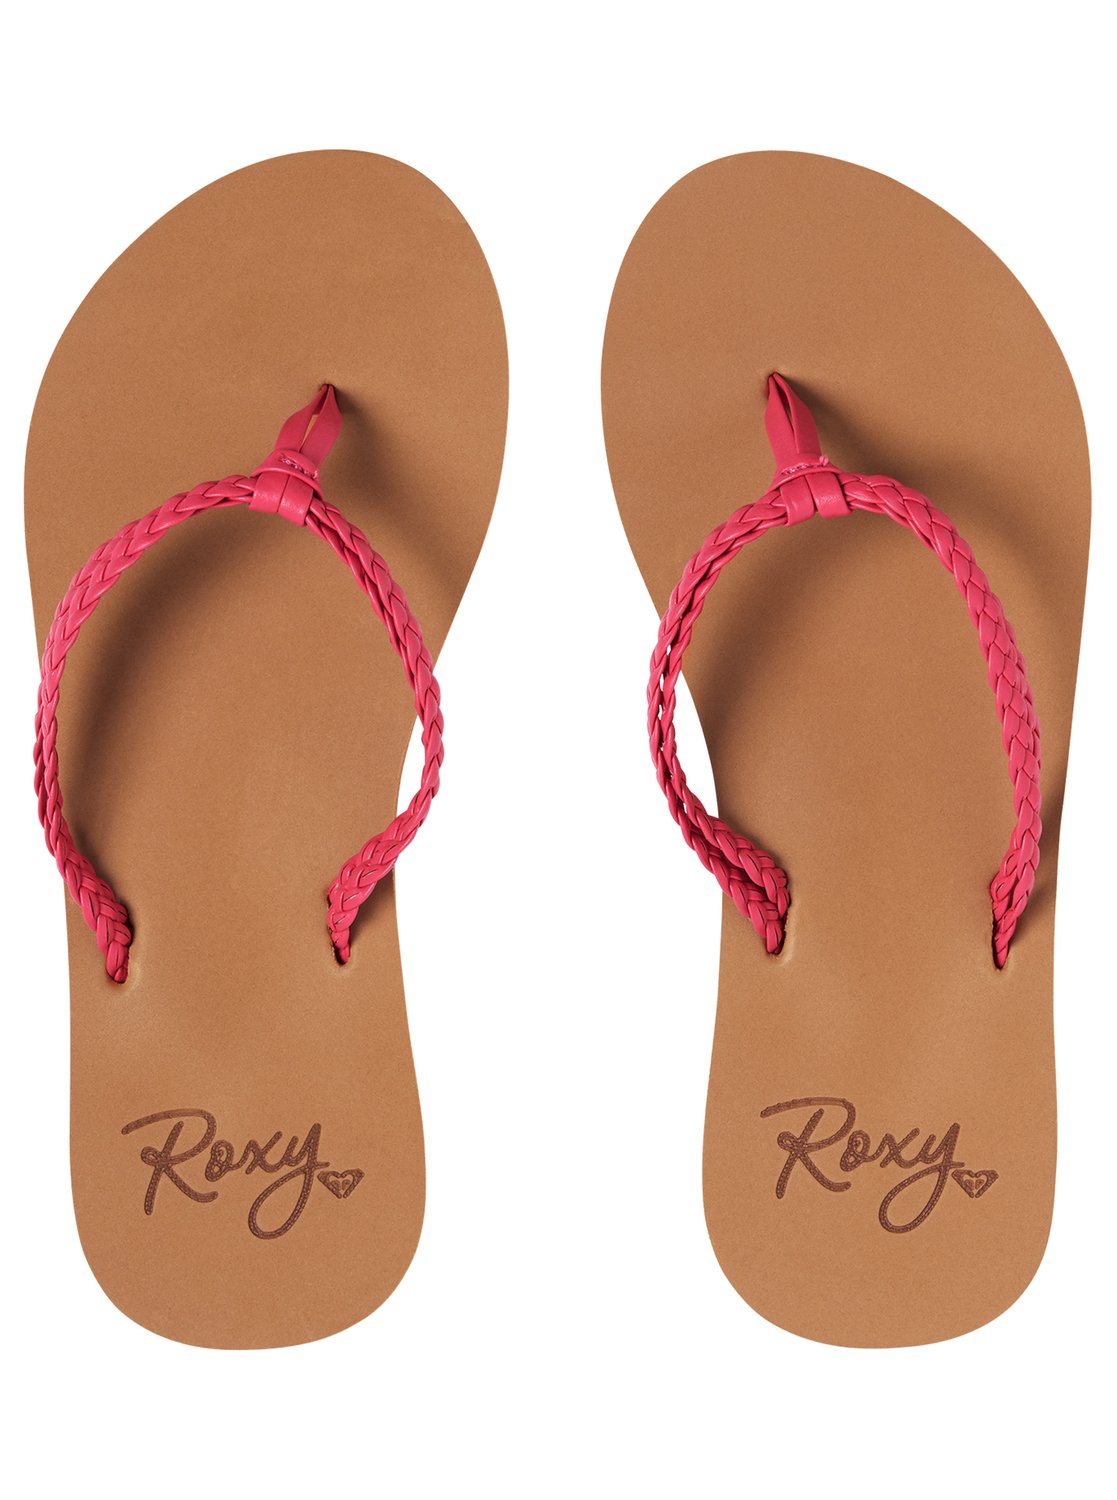 Roxy Costas 2 Girls Sandal RAS-Raspberry 12 C